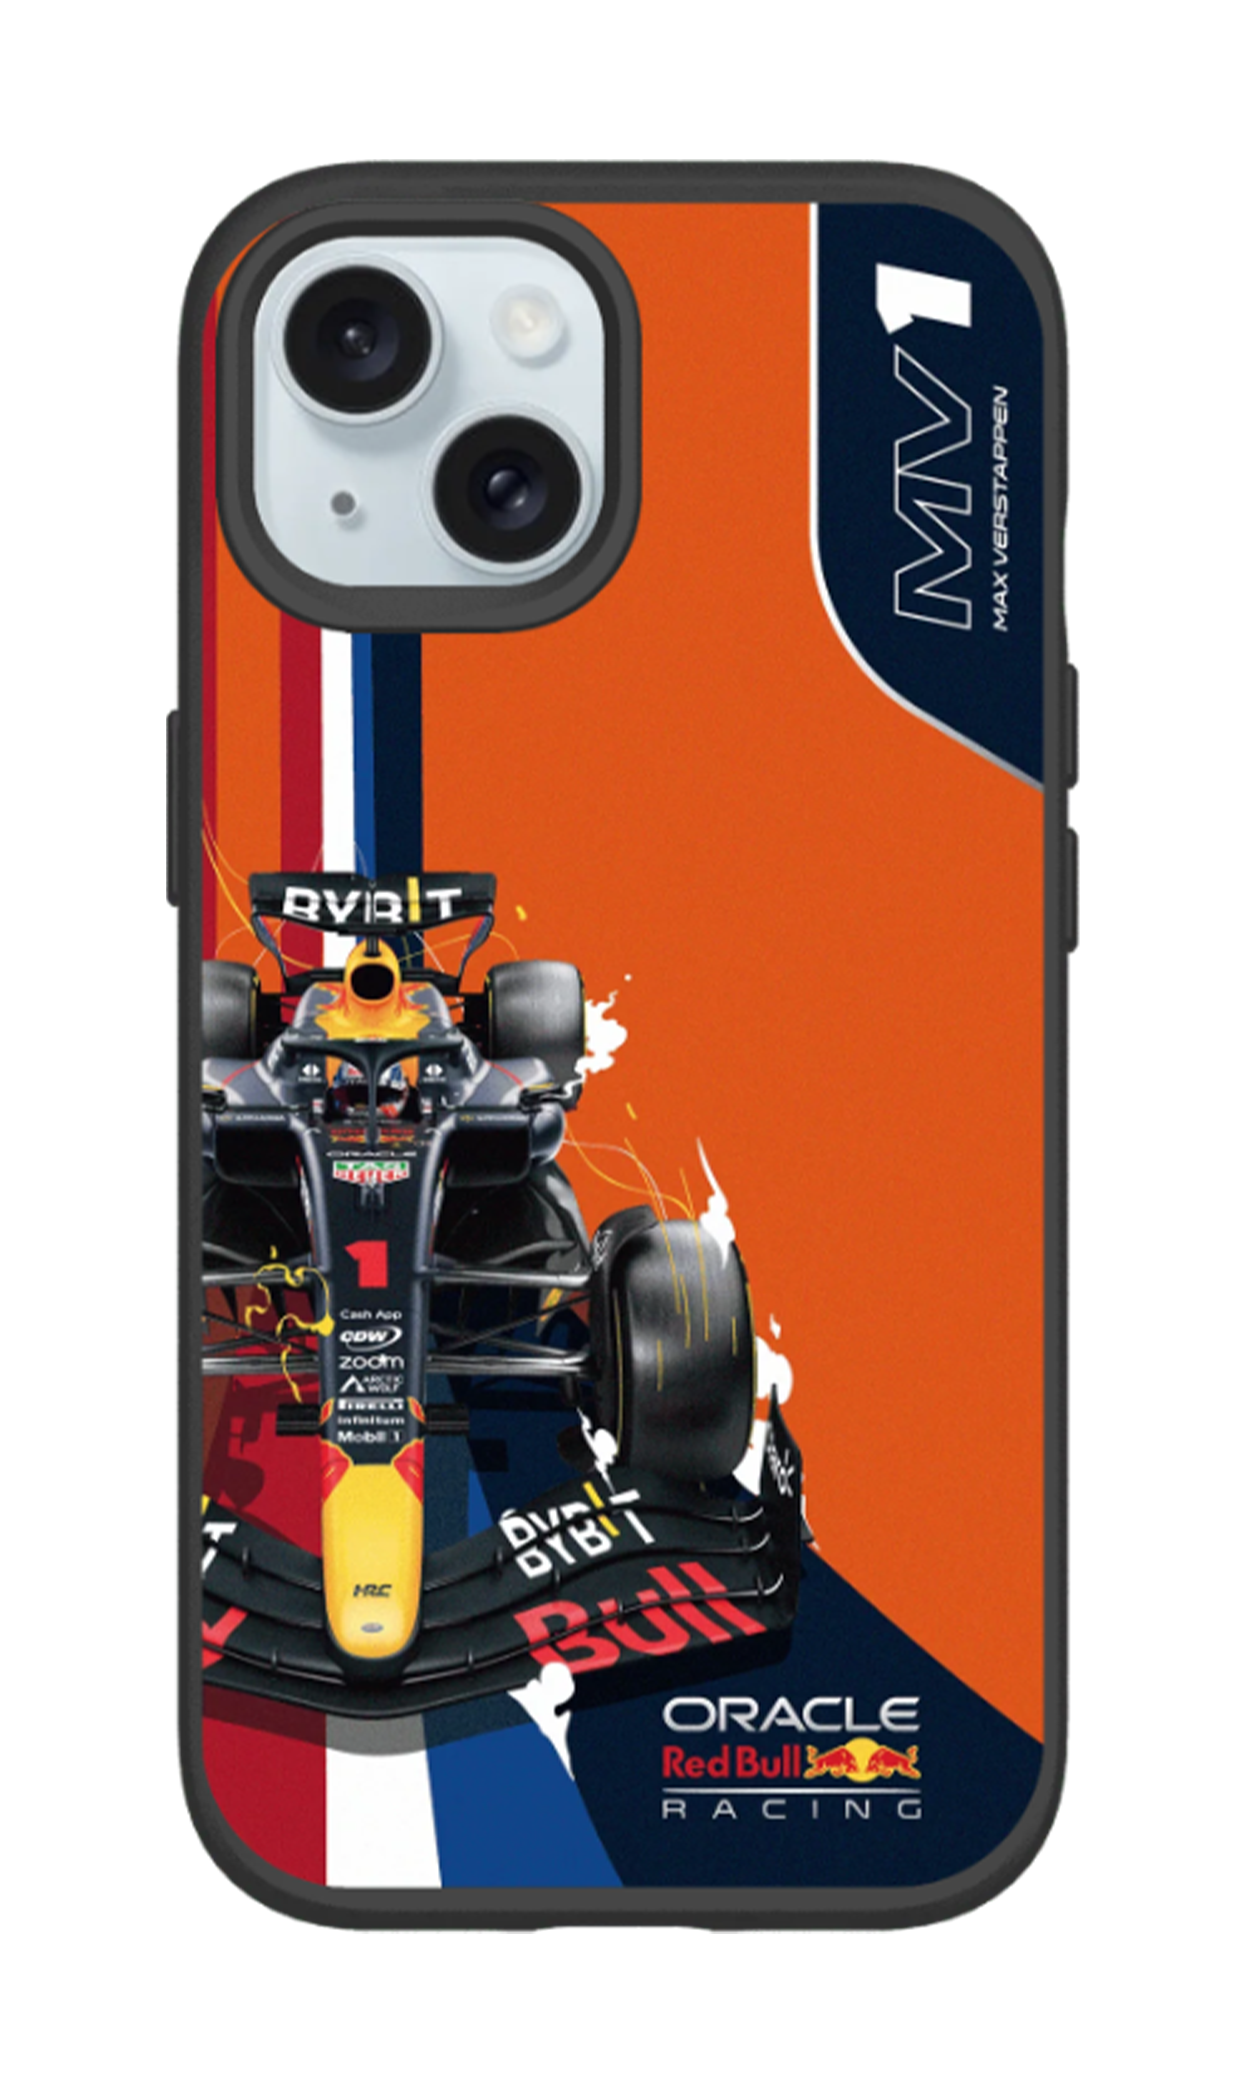 SolidSuit Black X Oracle Red Bull Racing - F1 Car Max Verstappen MV1 